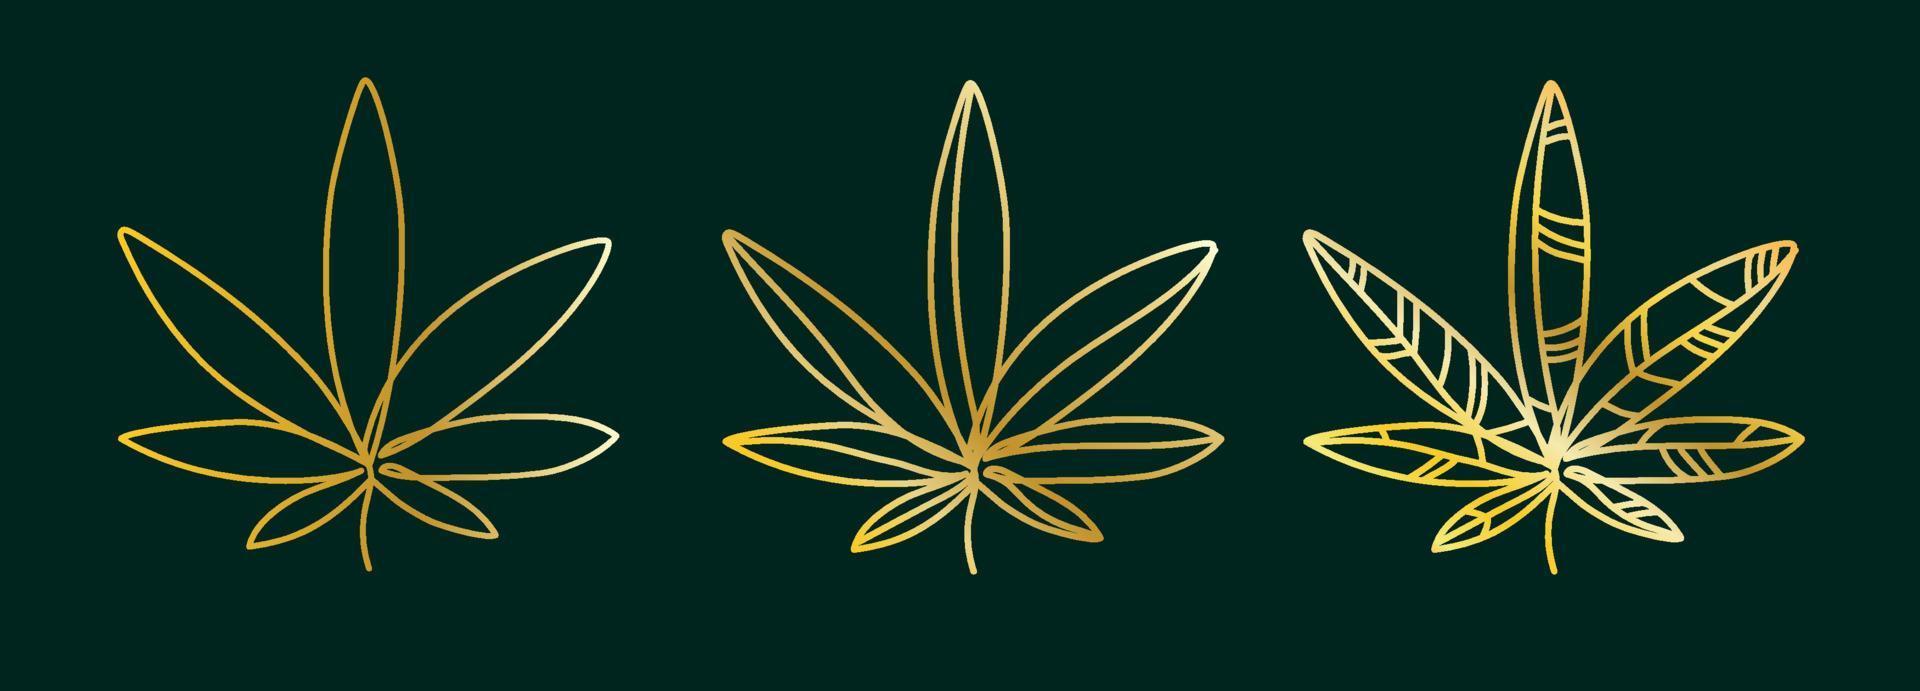 Golden cannabis leaf, hemp on a dark green background set of logos.Simple cannabis vector design graphic illustration minimalist